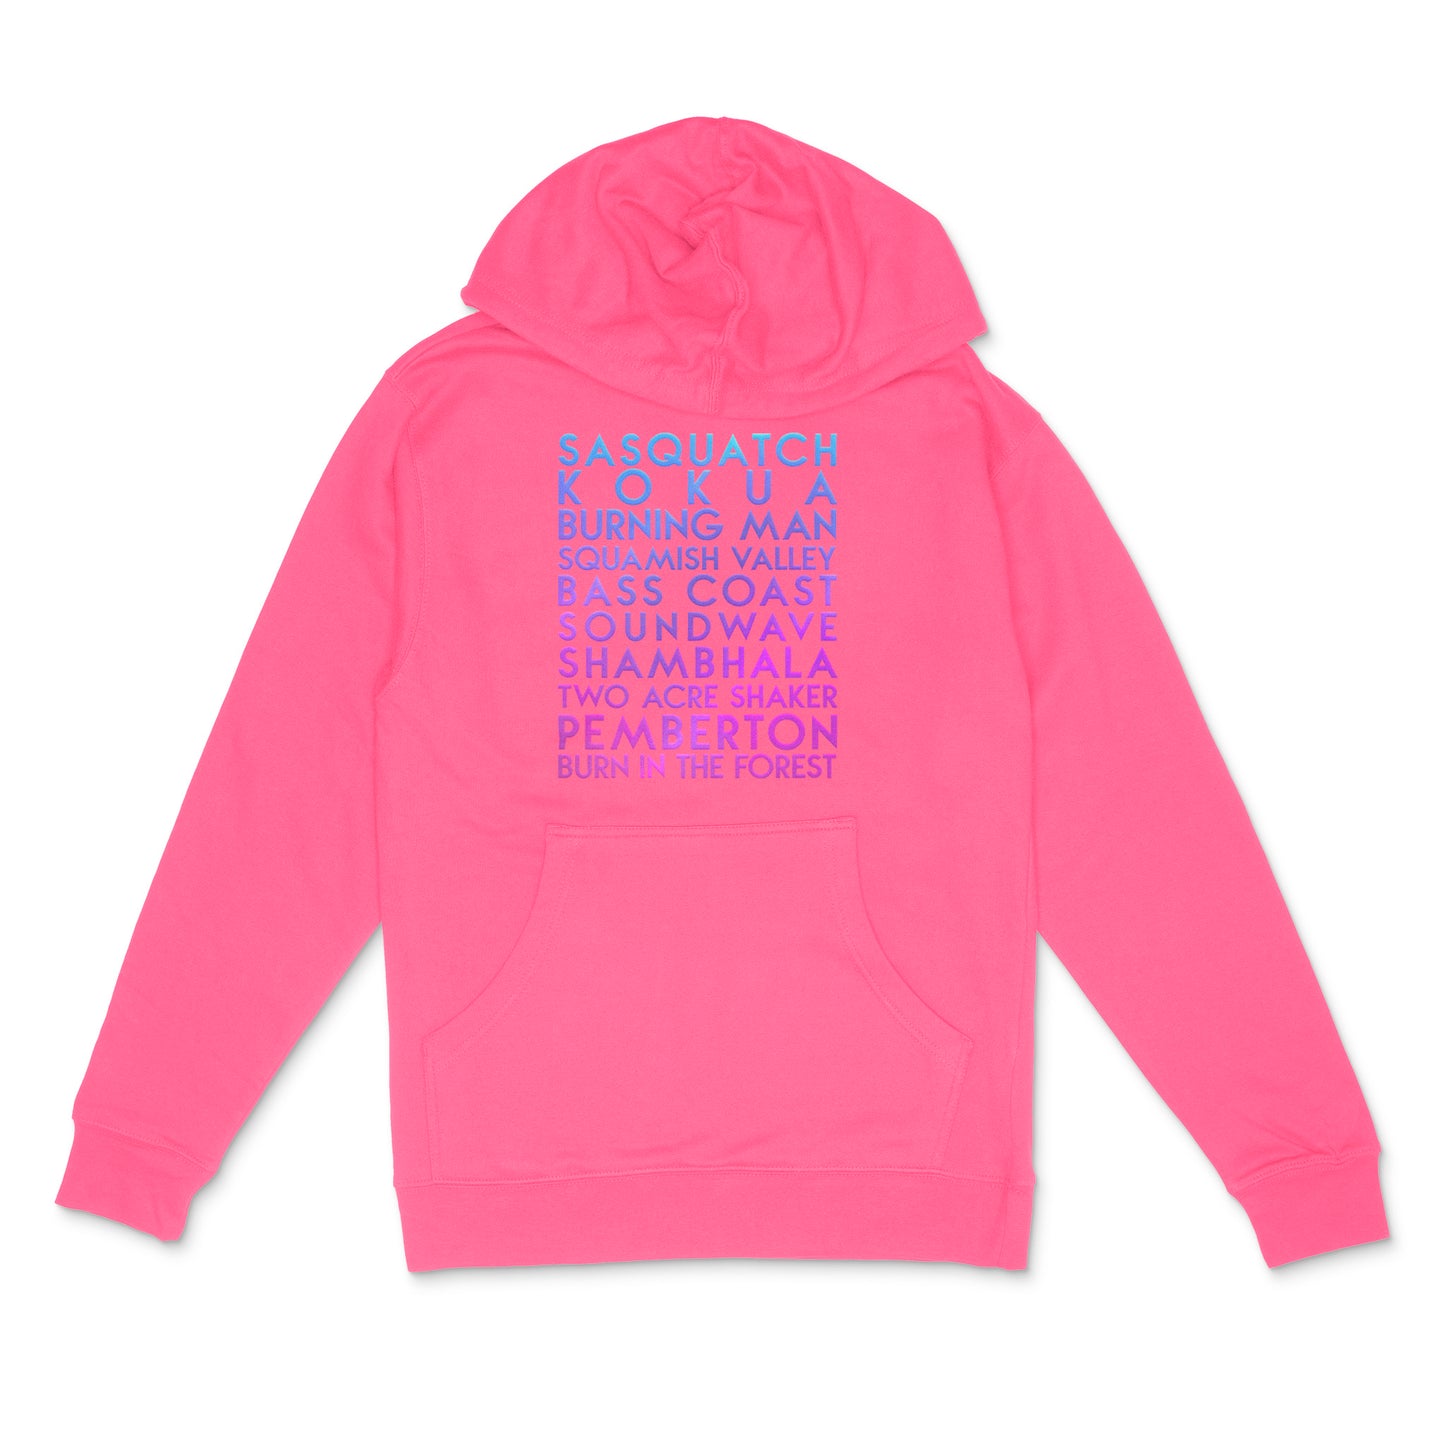 custom sample - festivals - custom holo pearl text on neon pink unisex pullover hoodie - Custom YourTen sweatshirt by BBJ / Glitter Garage